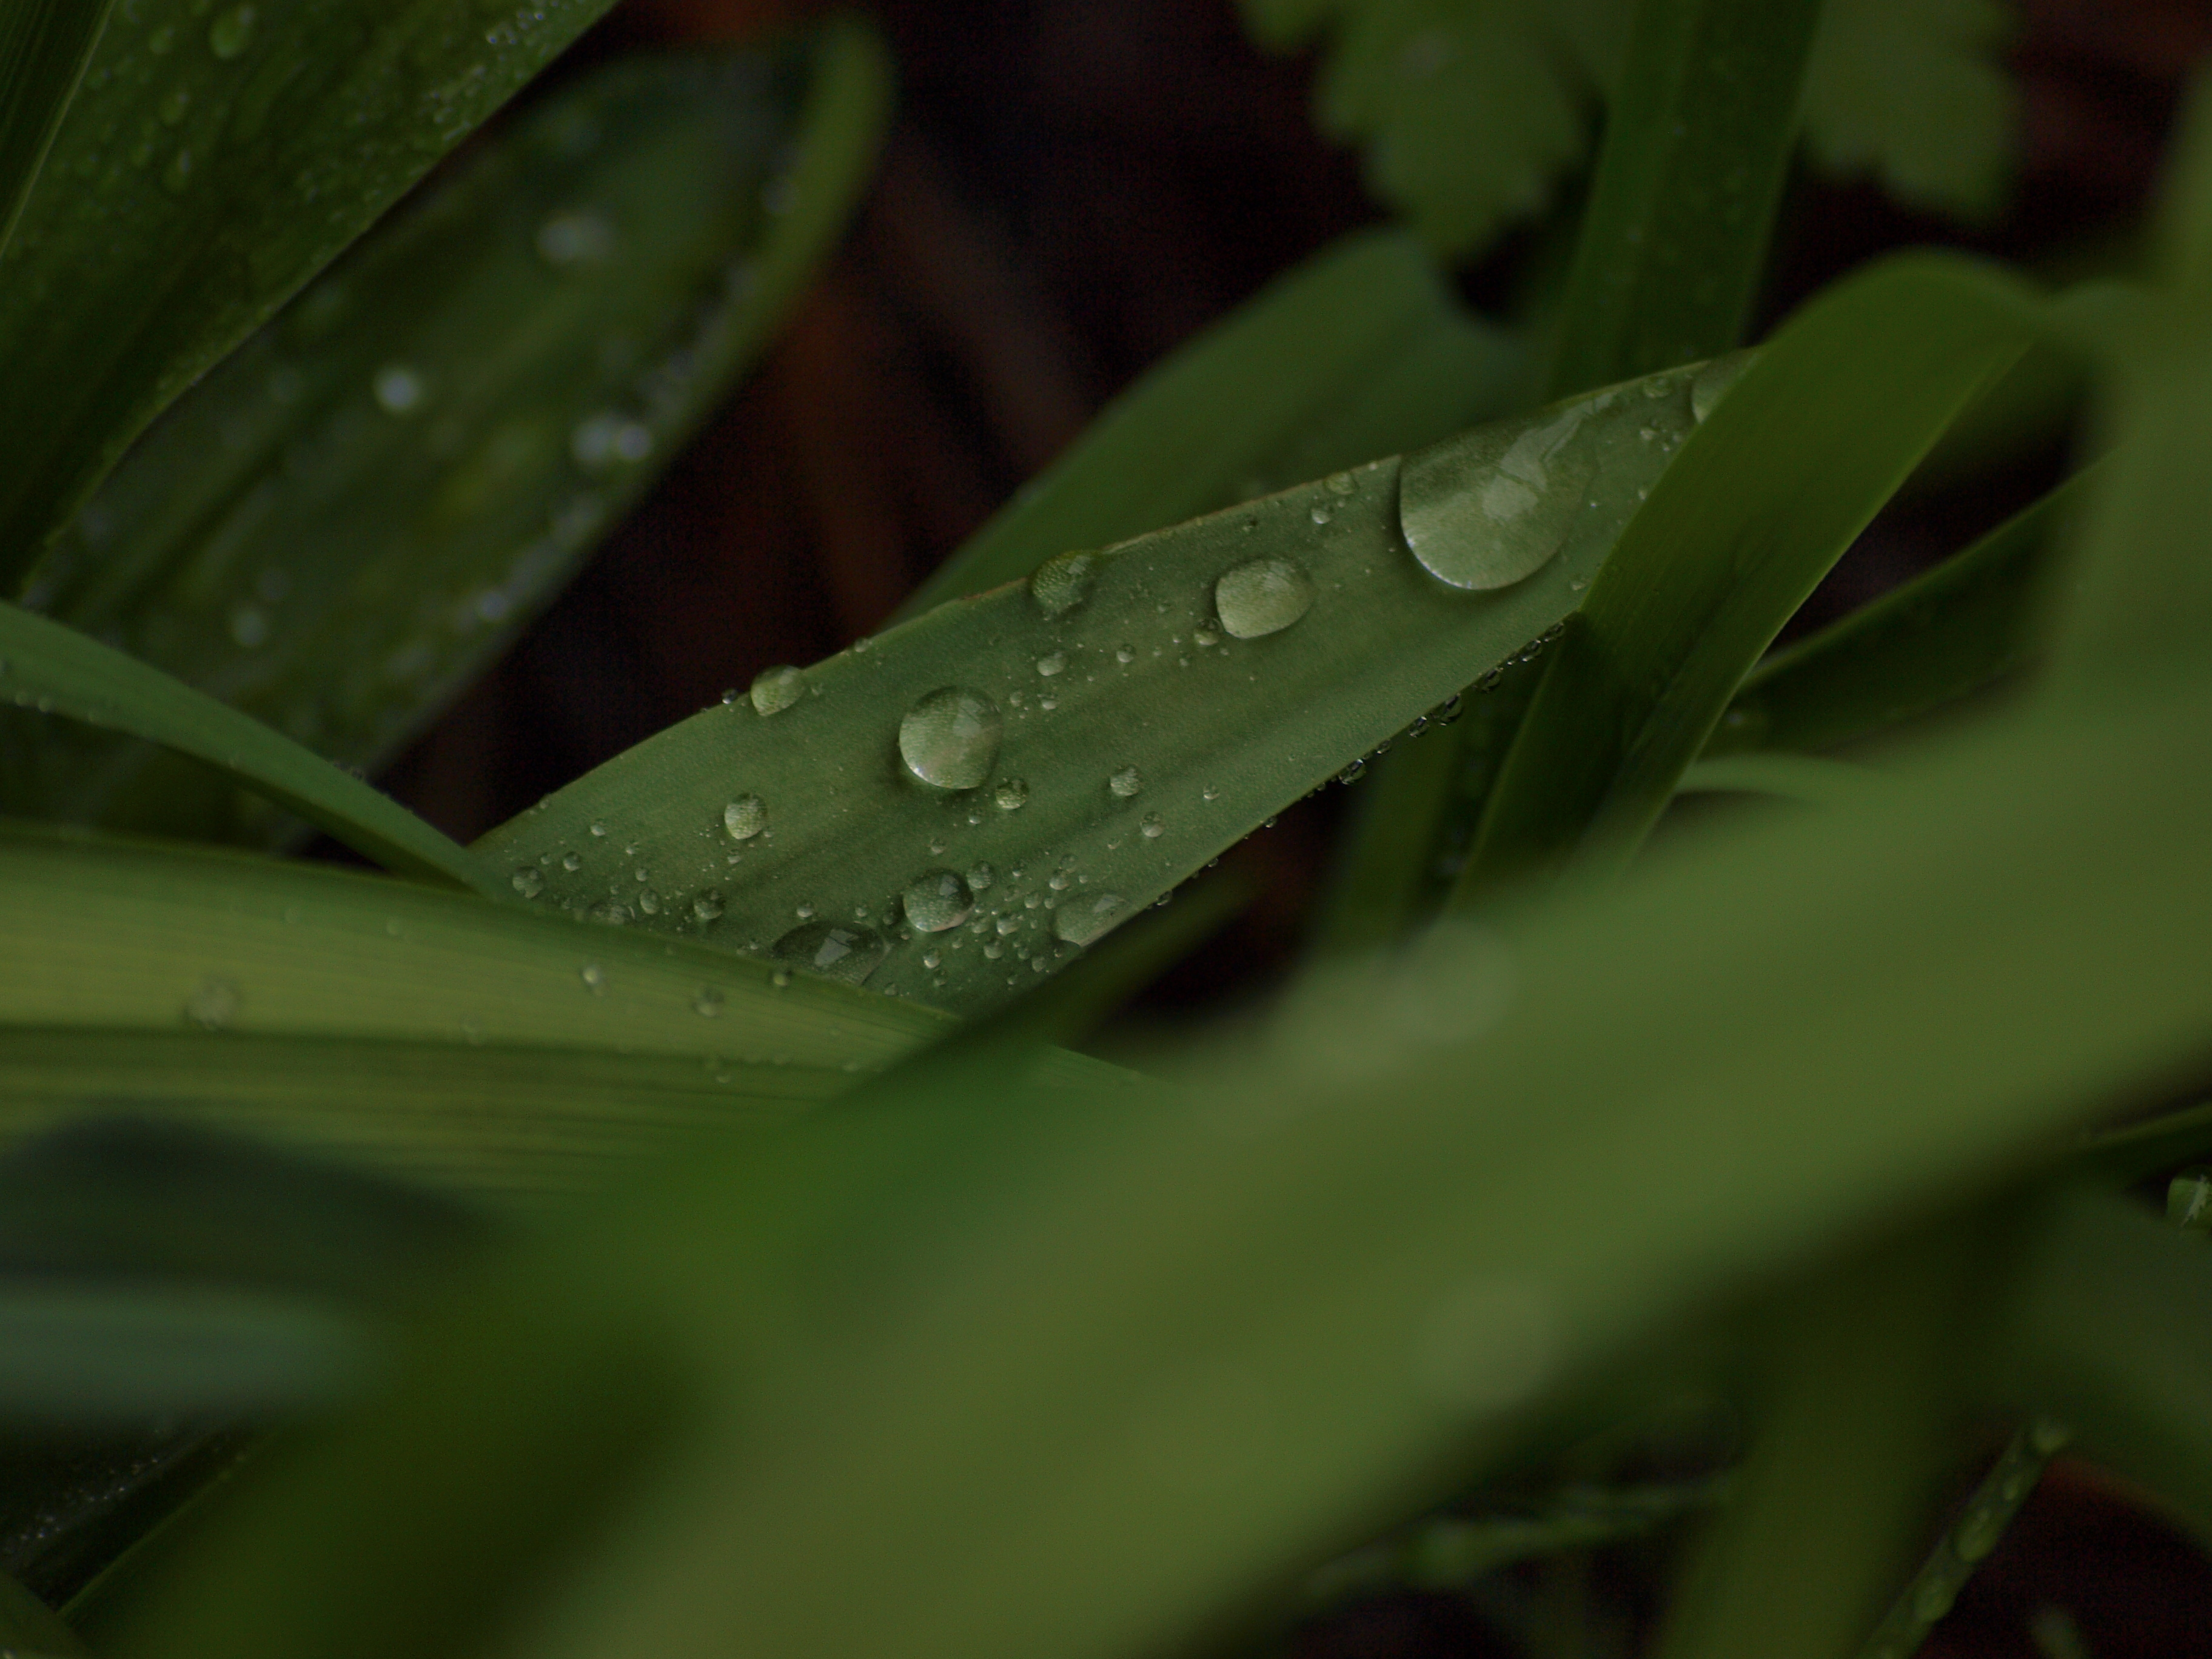 Raindrops on leafs